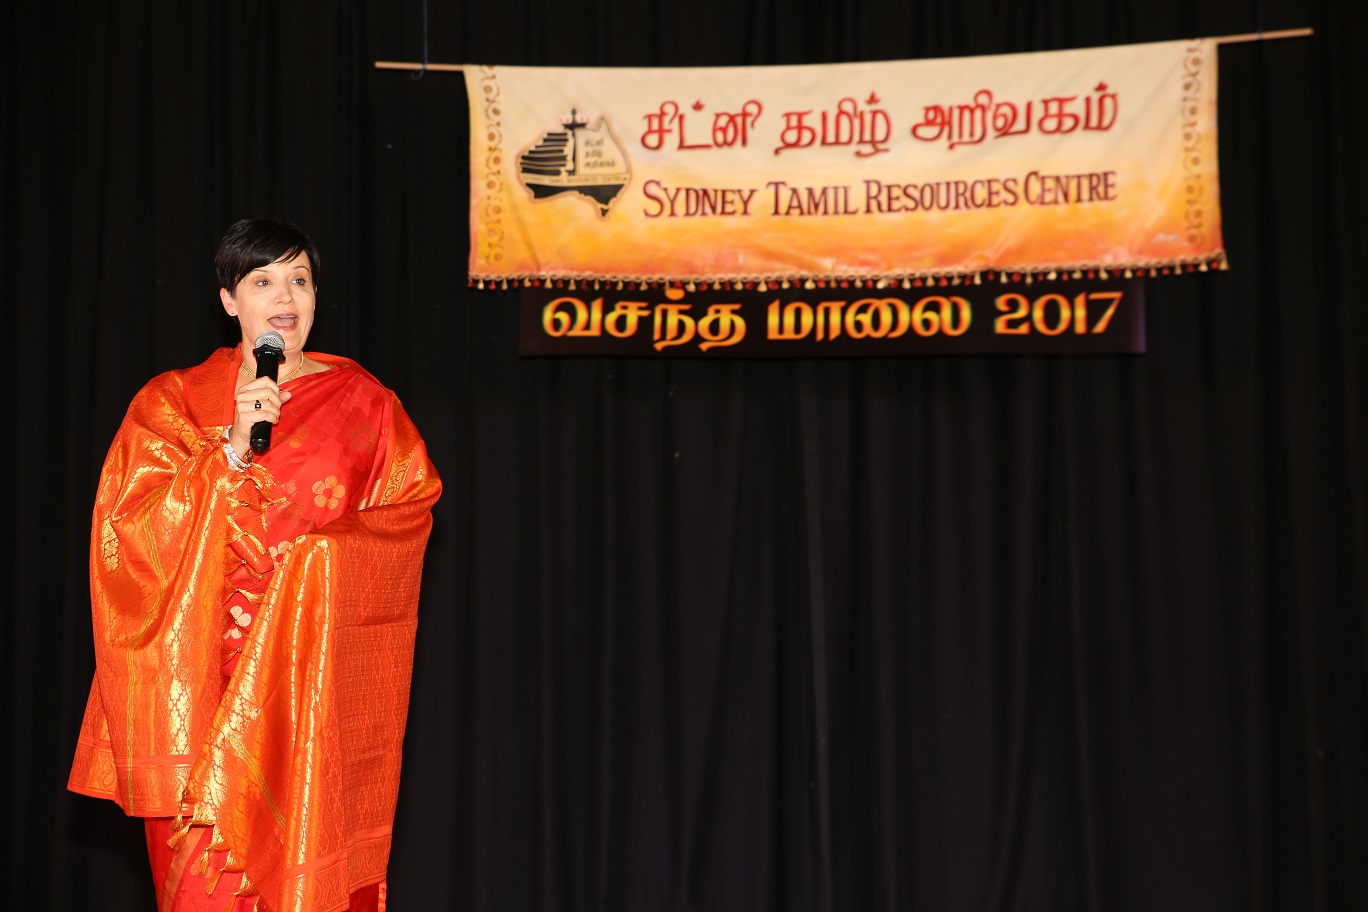 Vasantha Maalai 2017 Sydney Tamil Resources